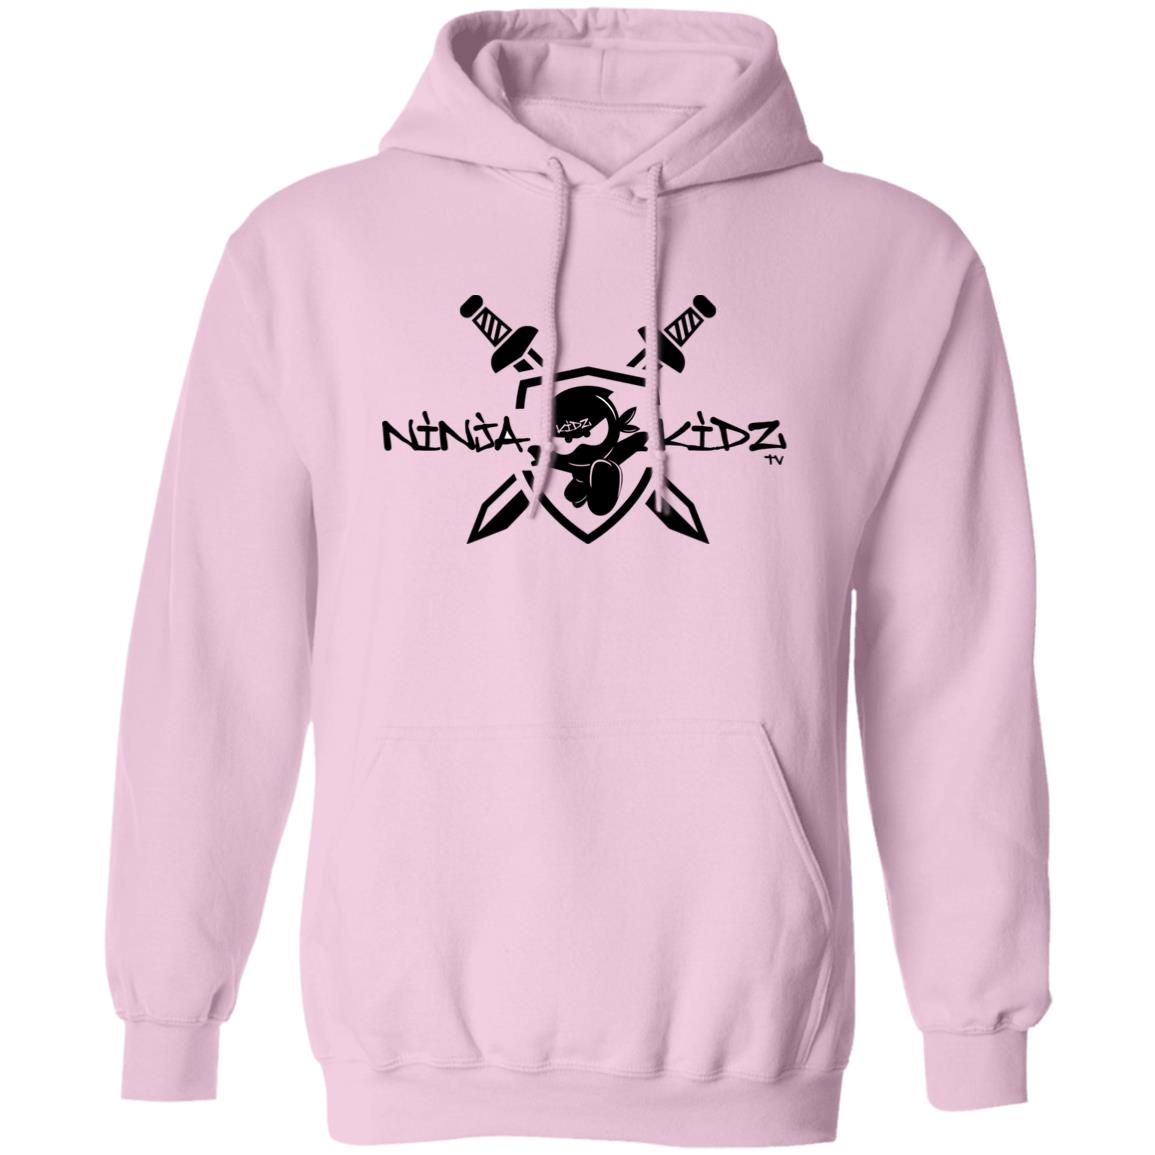 Ninja kids merch ninja kidz shield shirt, hoodie, sweater, long sleeve and  tank top